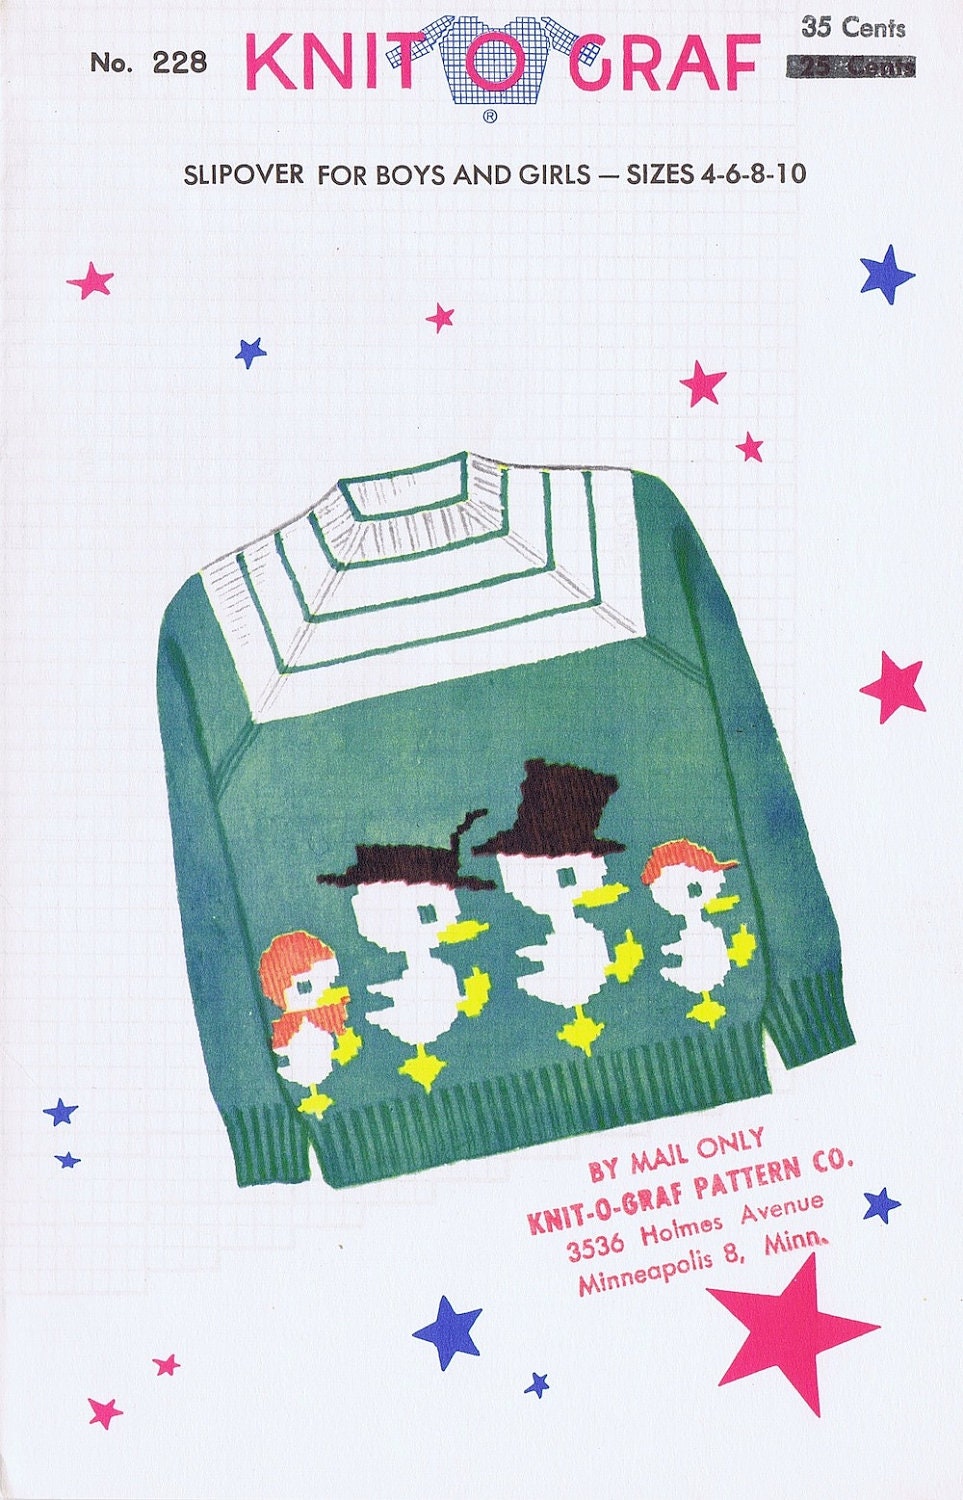 Duck Knitting Pattern